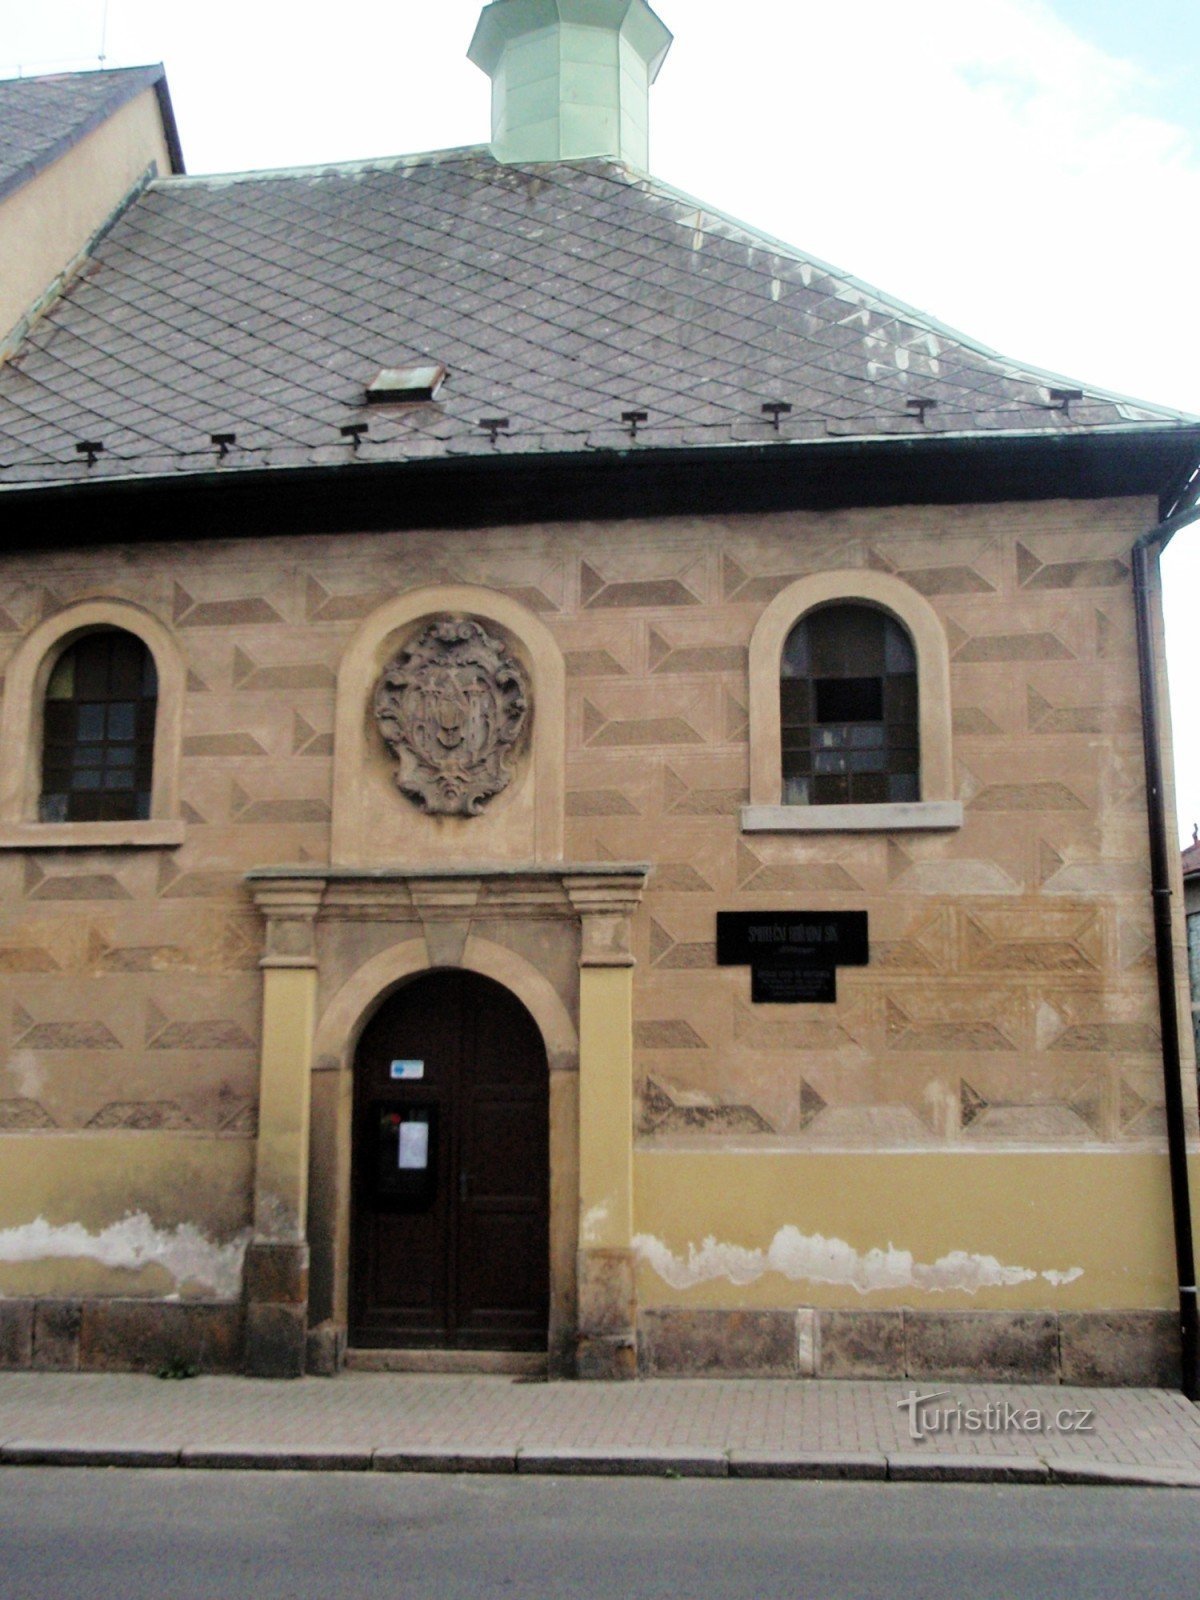 Chapel of St. Wolfgang